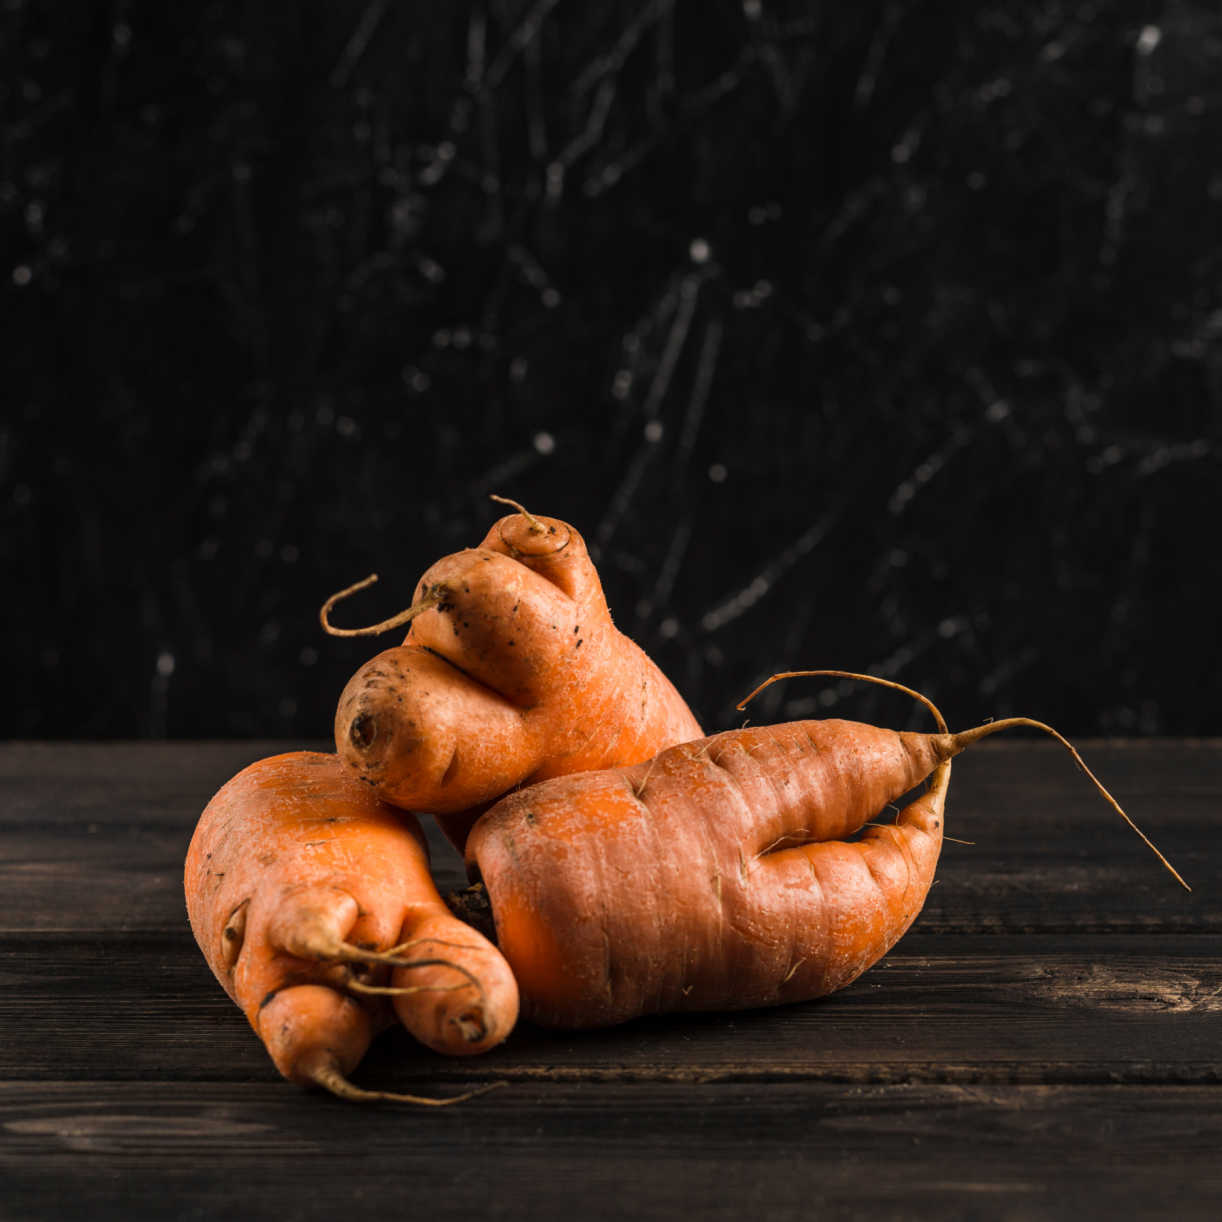 miss-shaped carrots